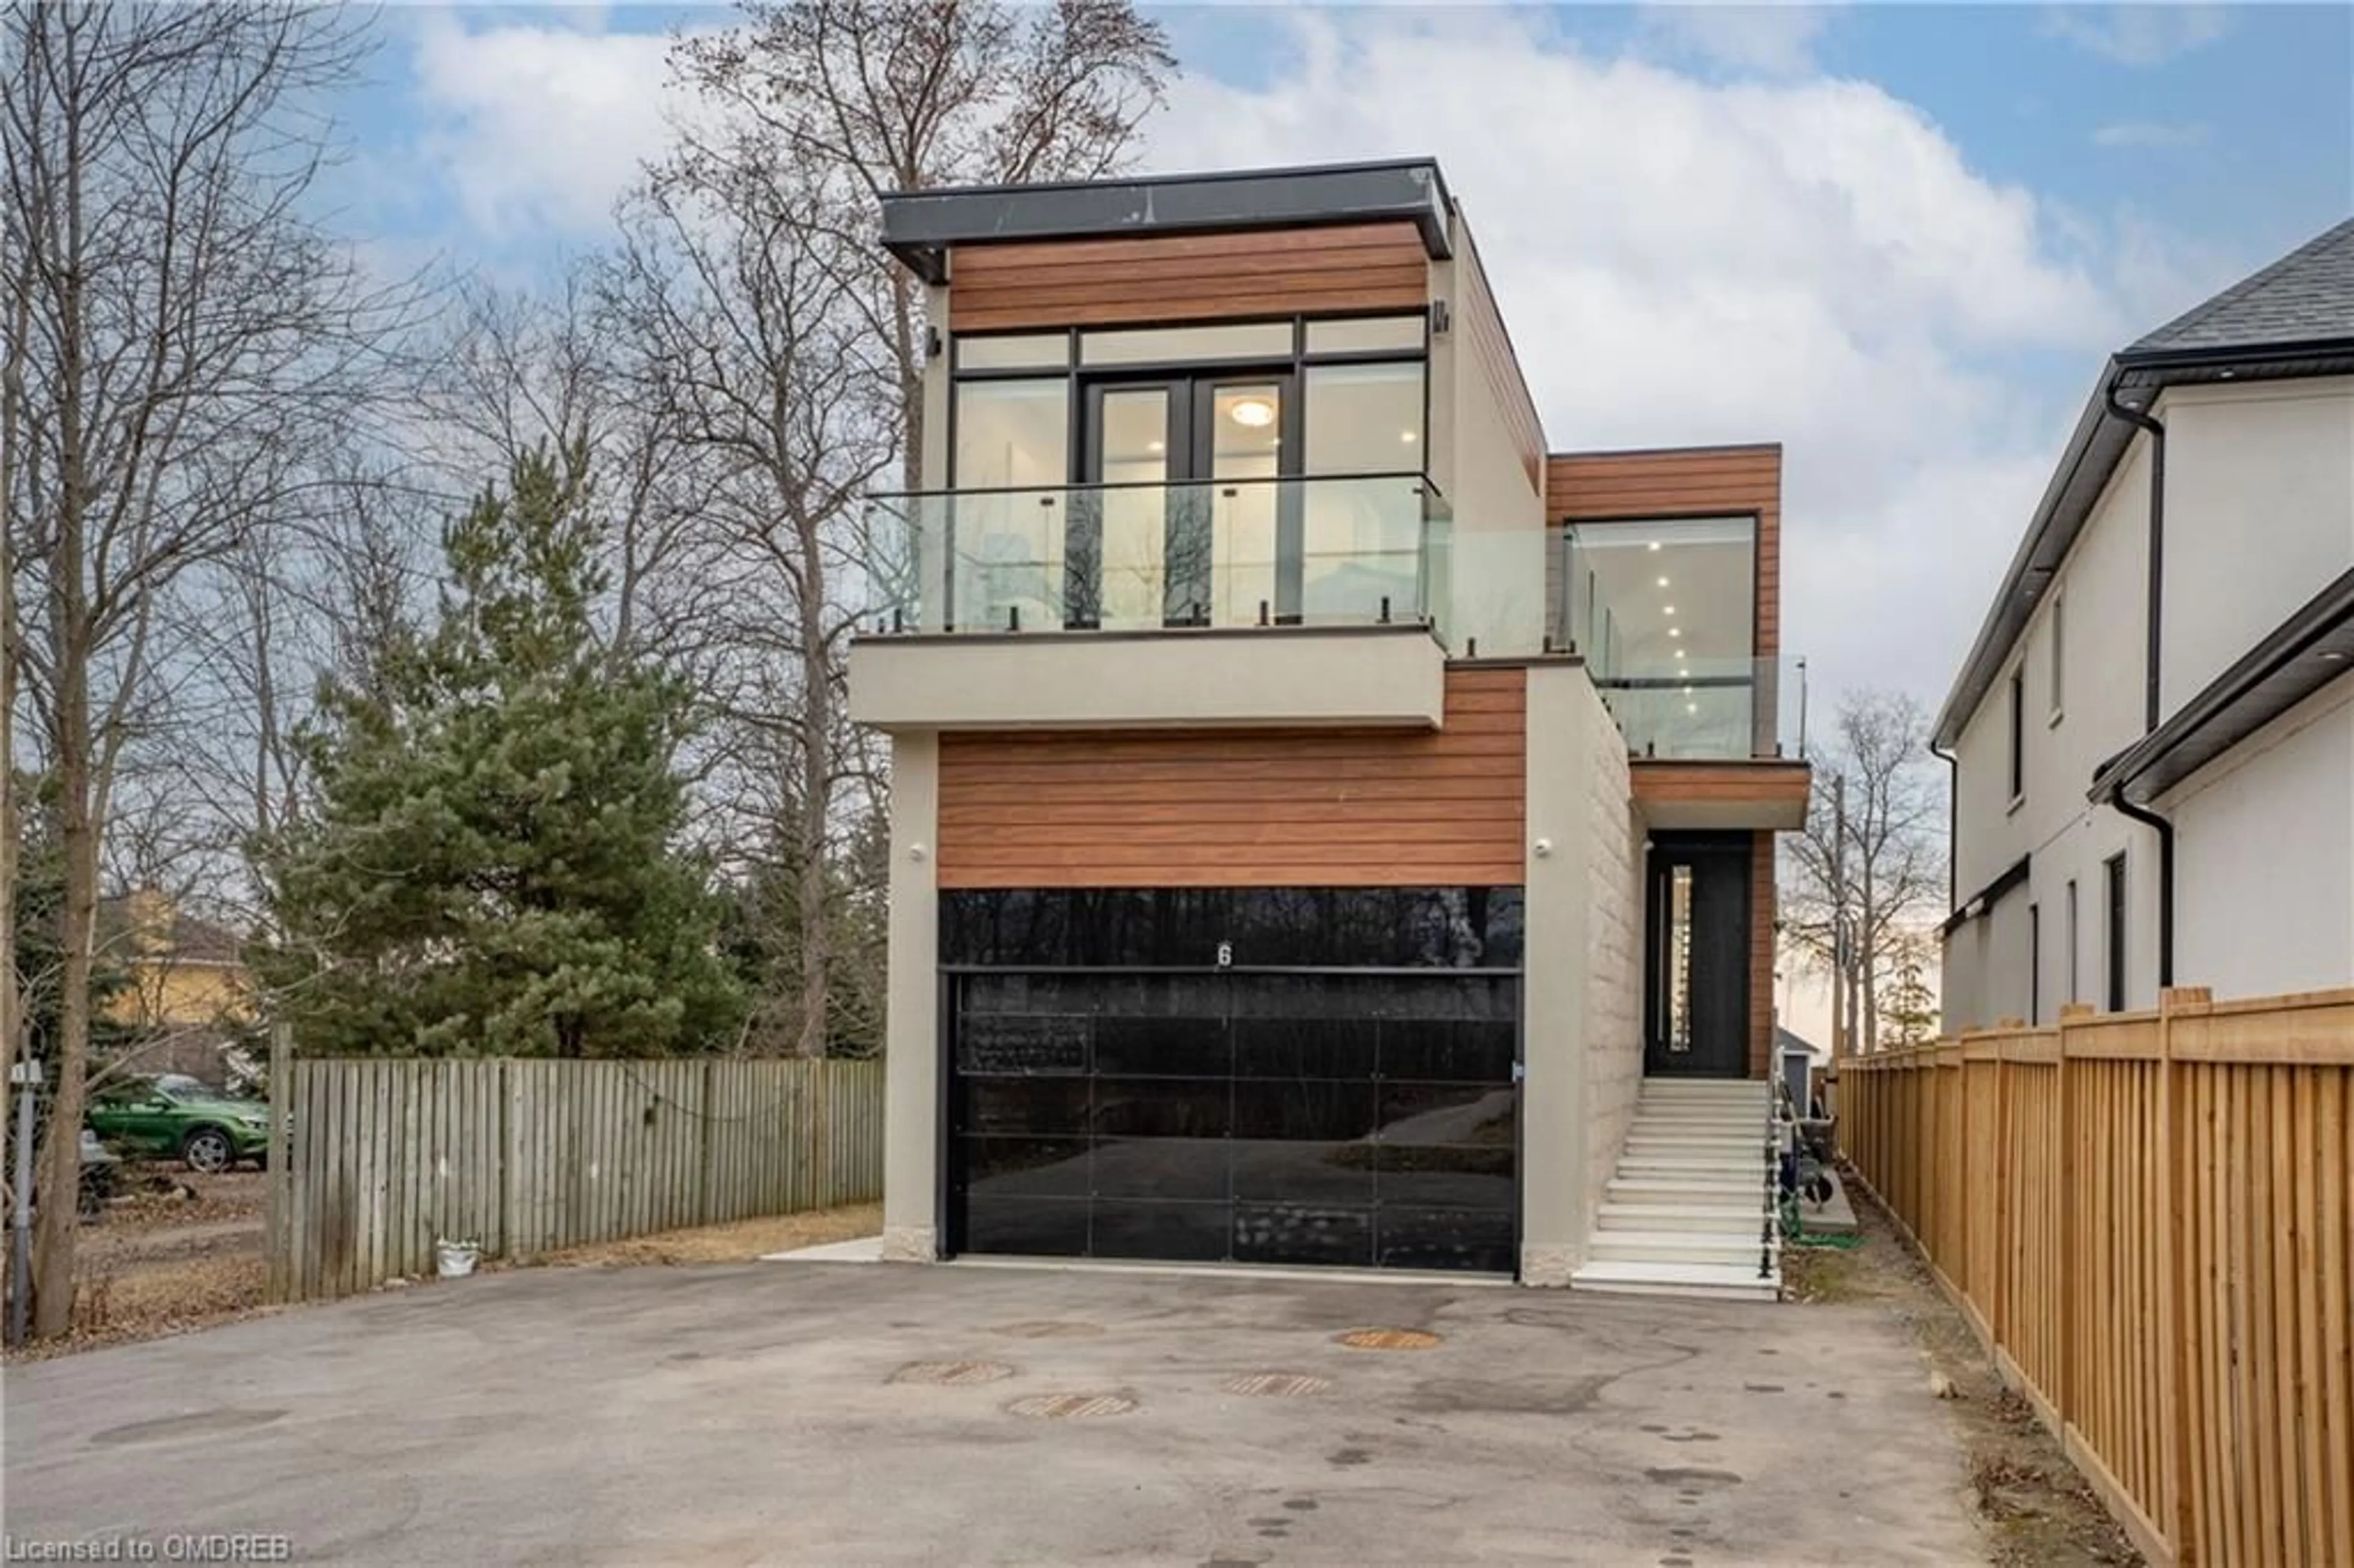 Home with brick exterior material for 6 Campview Rd, Stoney Creek Ontario L8E 5E2